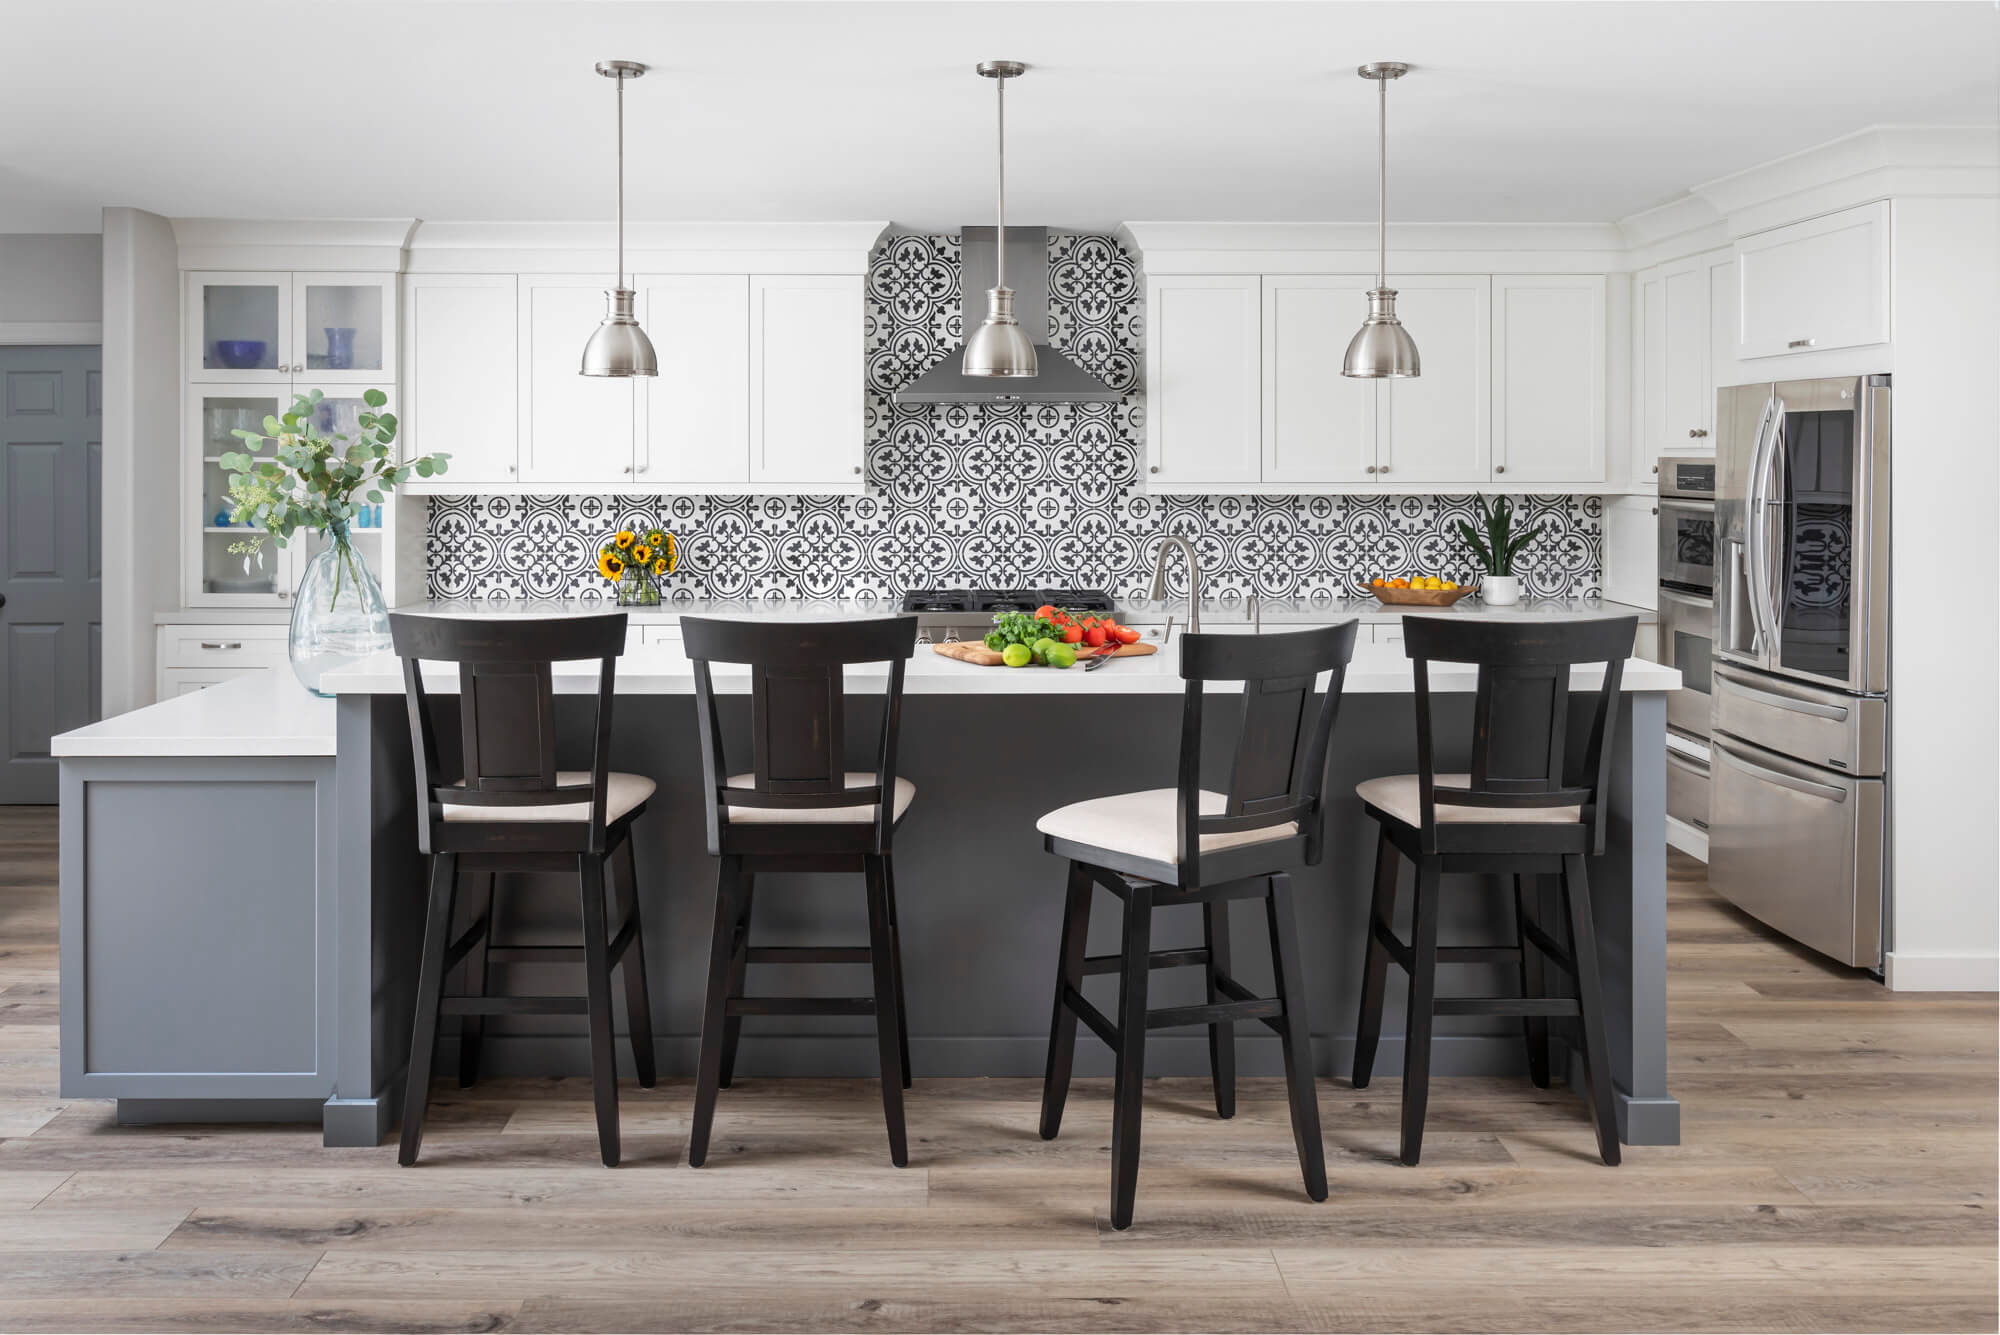 Kitchen design and remodeling by professional kitchen designer.